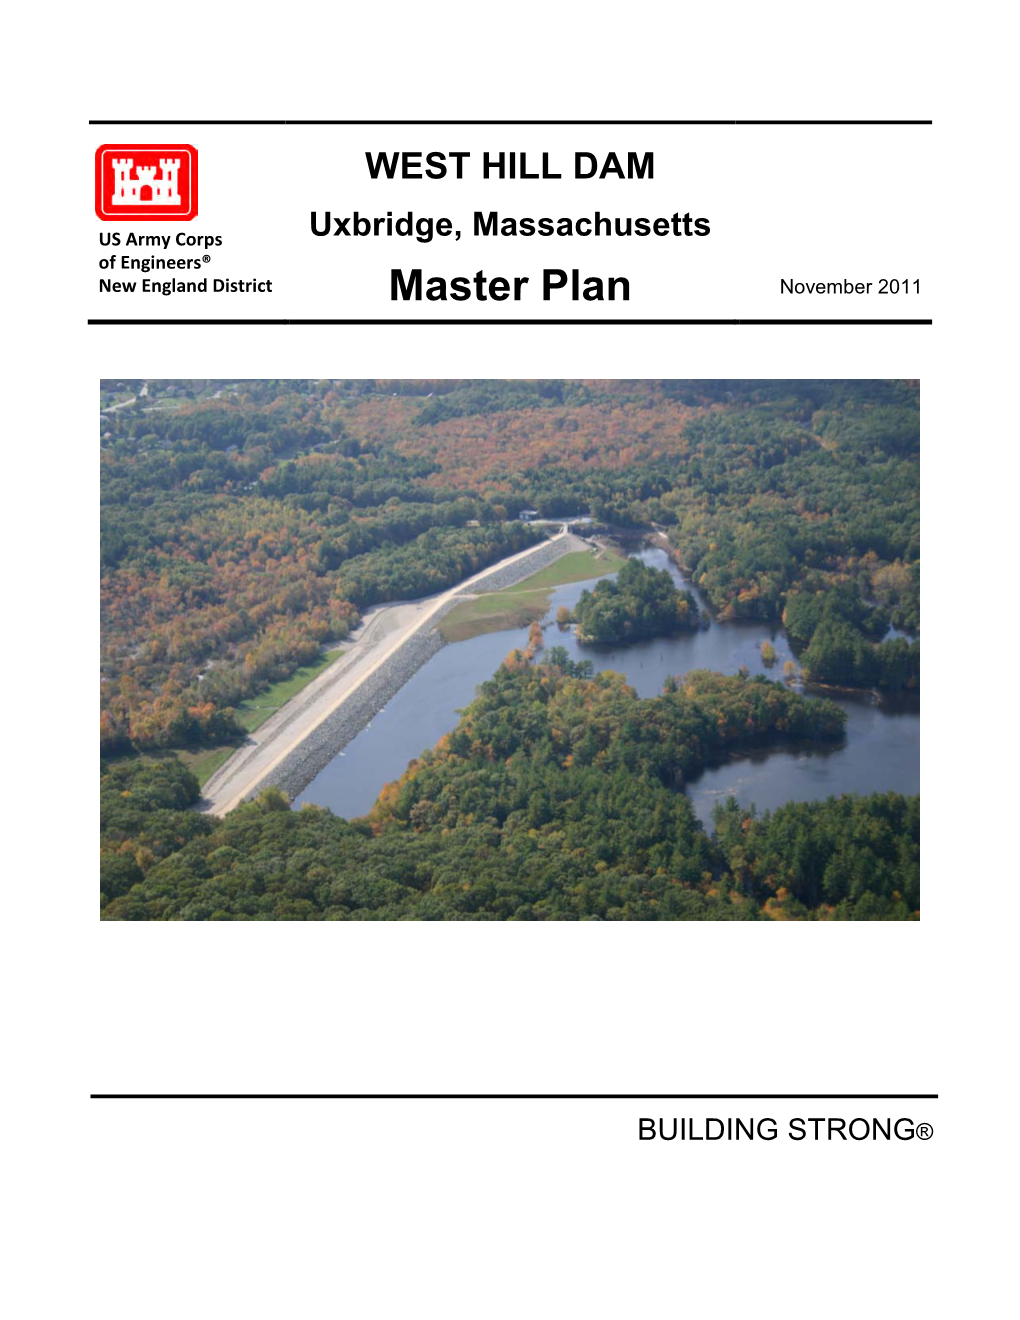 West Hill Dam Master Plan